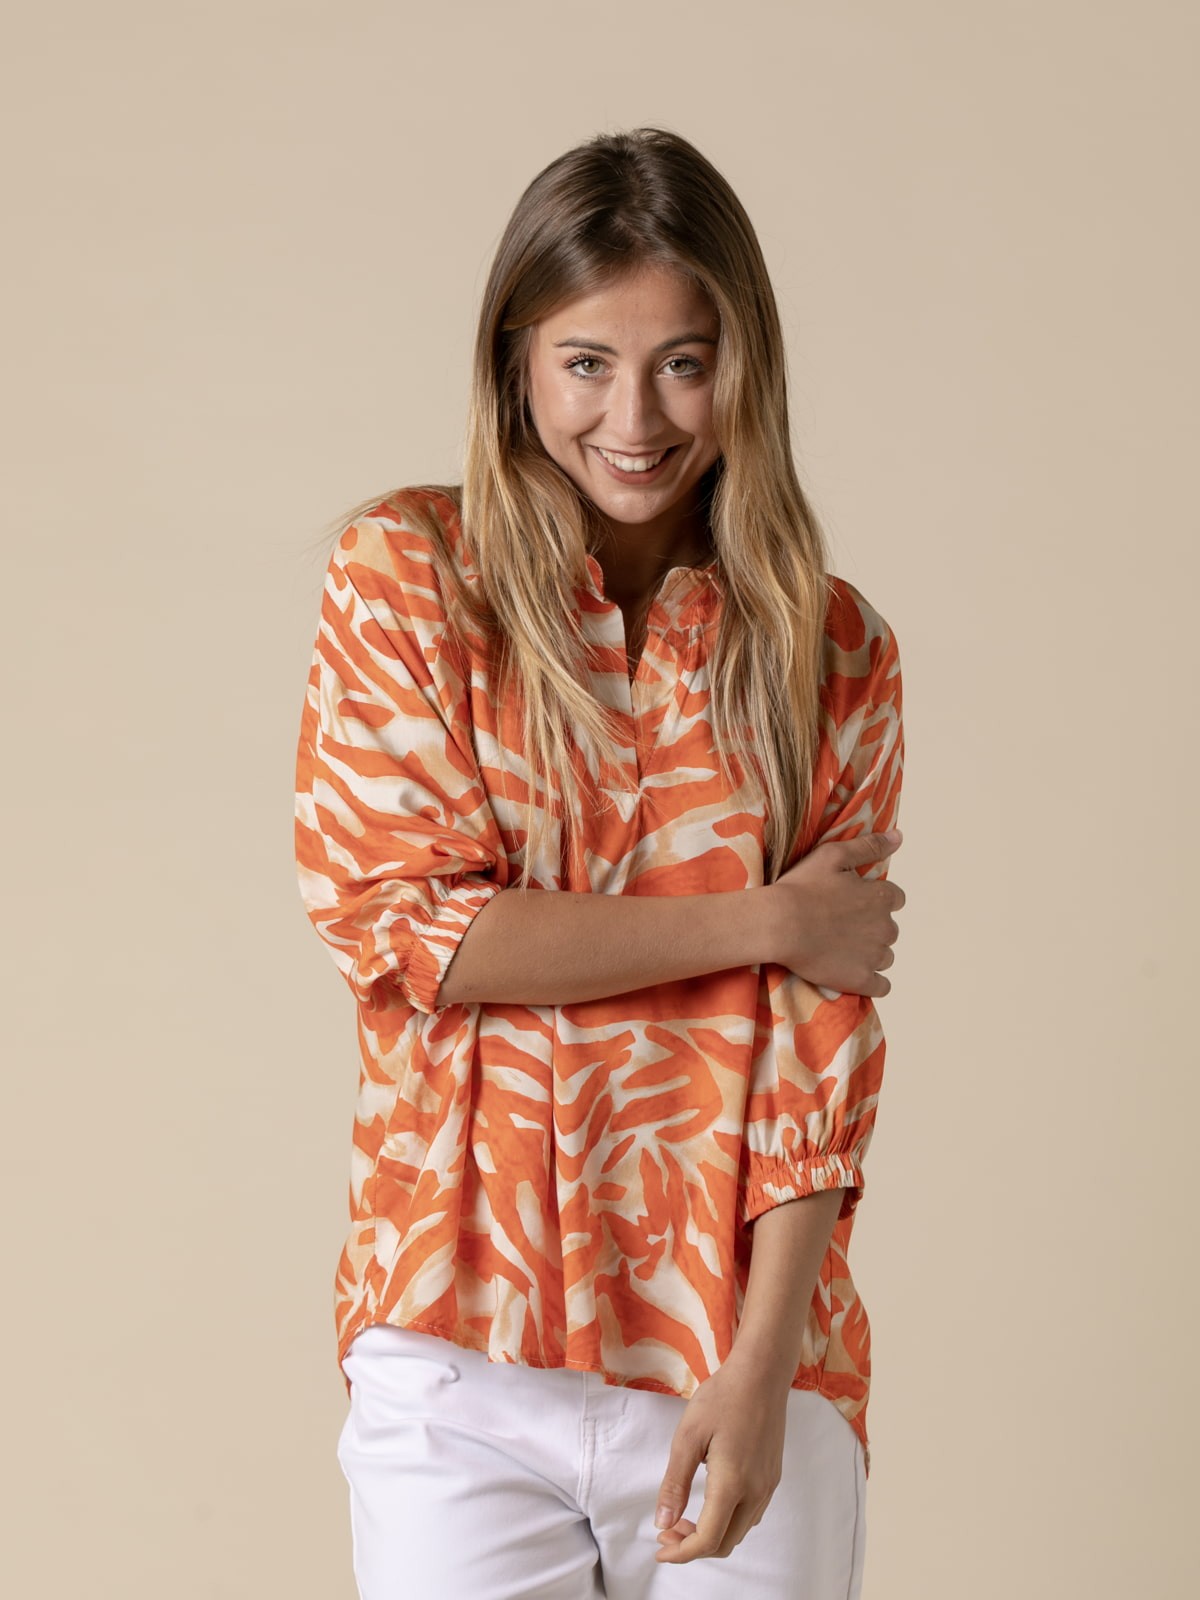 Woman Animal print blouse  Orangecolour